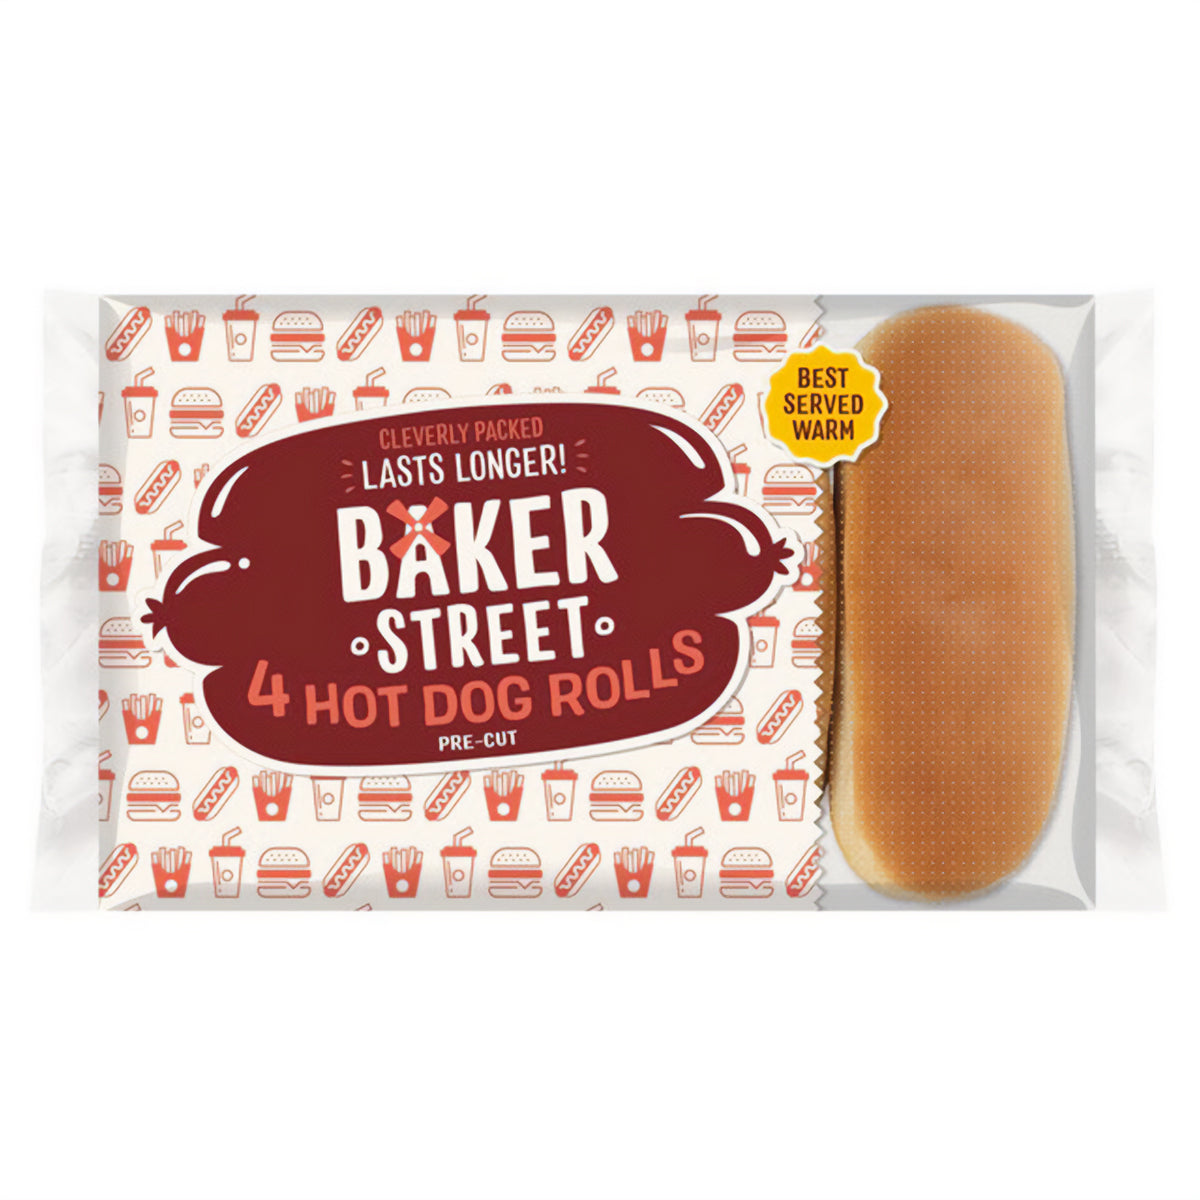 Baker Street - 4 Hot Dog Rolls - 4pk hot dog rolls.